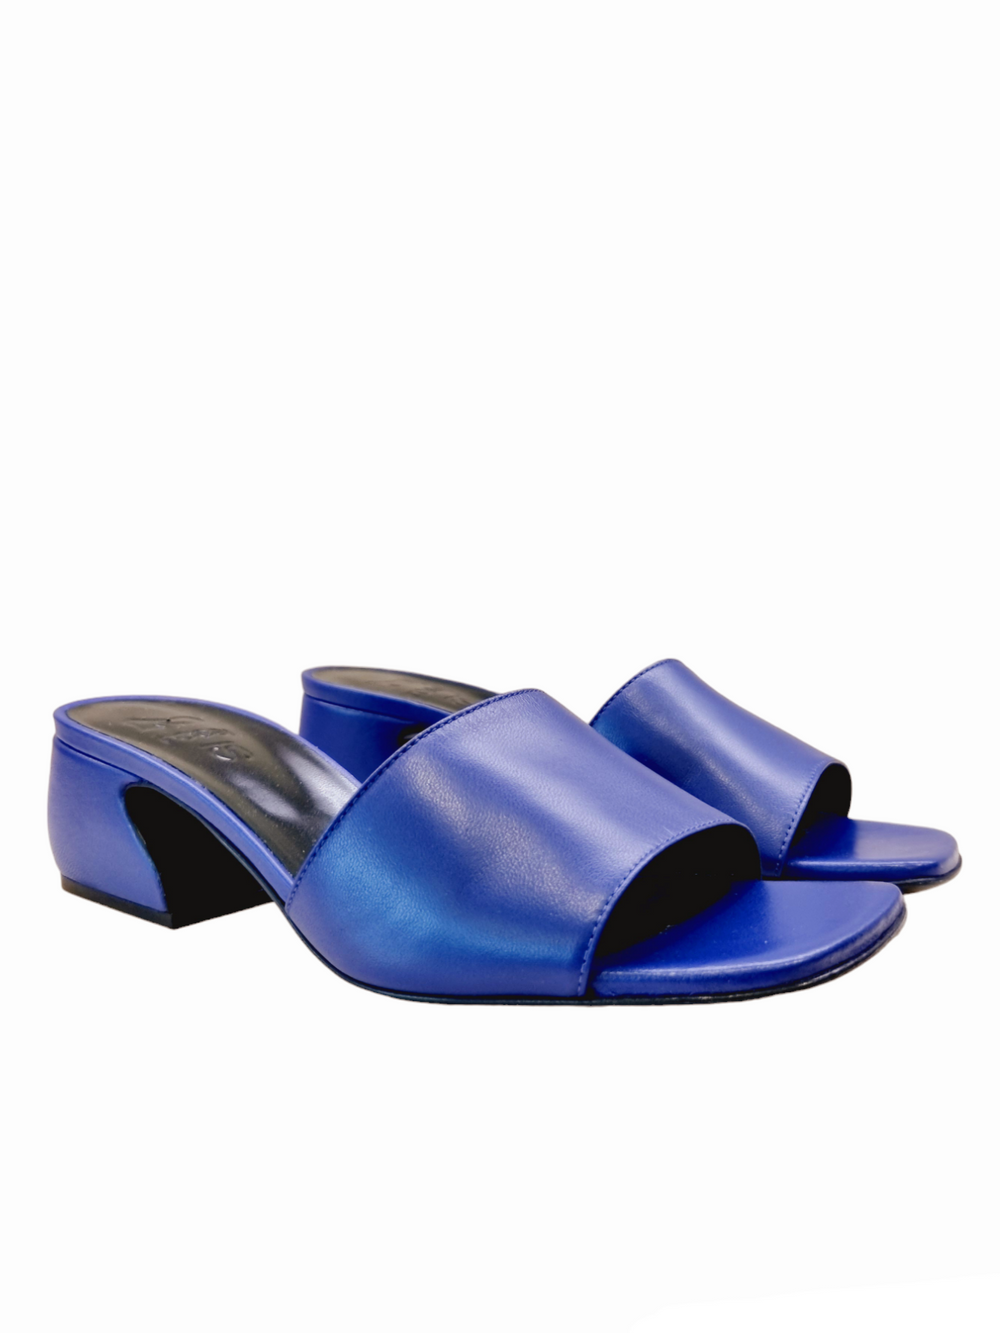 Si Rossi Purple Mule Sandals - SERGIO ROSSI - Liberty Shoes Australia